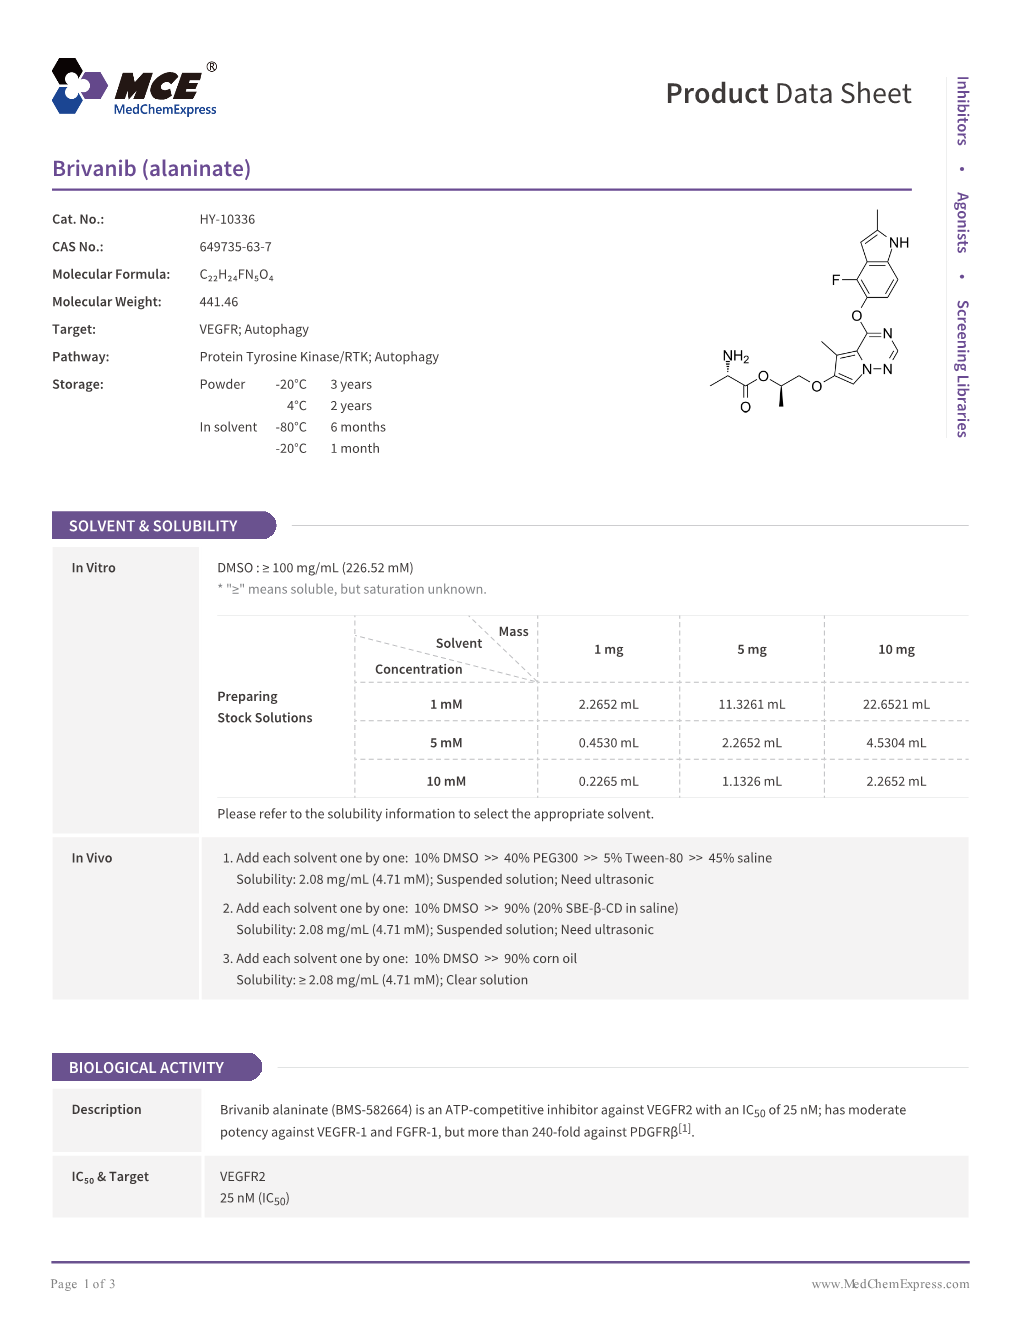 Brivanib (Alaninate) | Medchemexpress